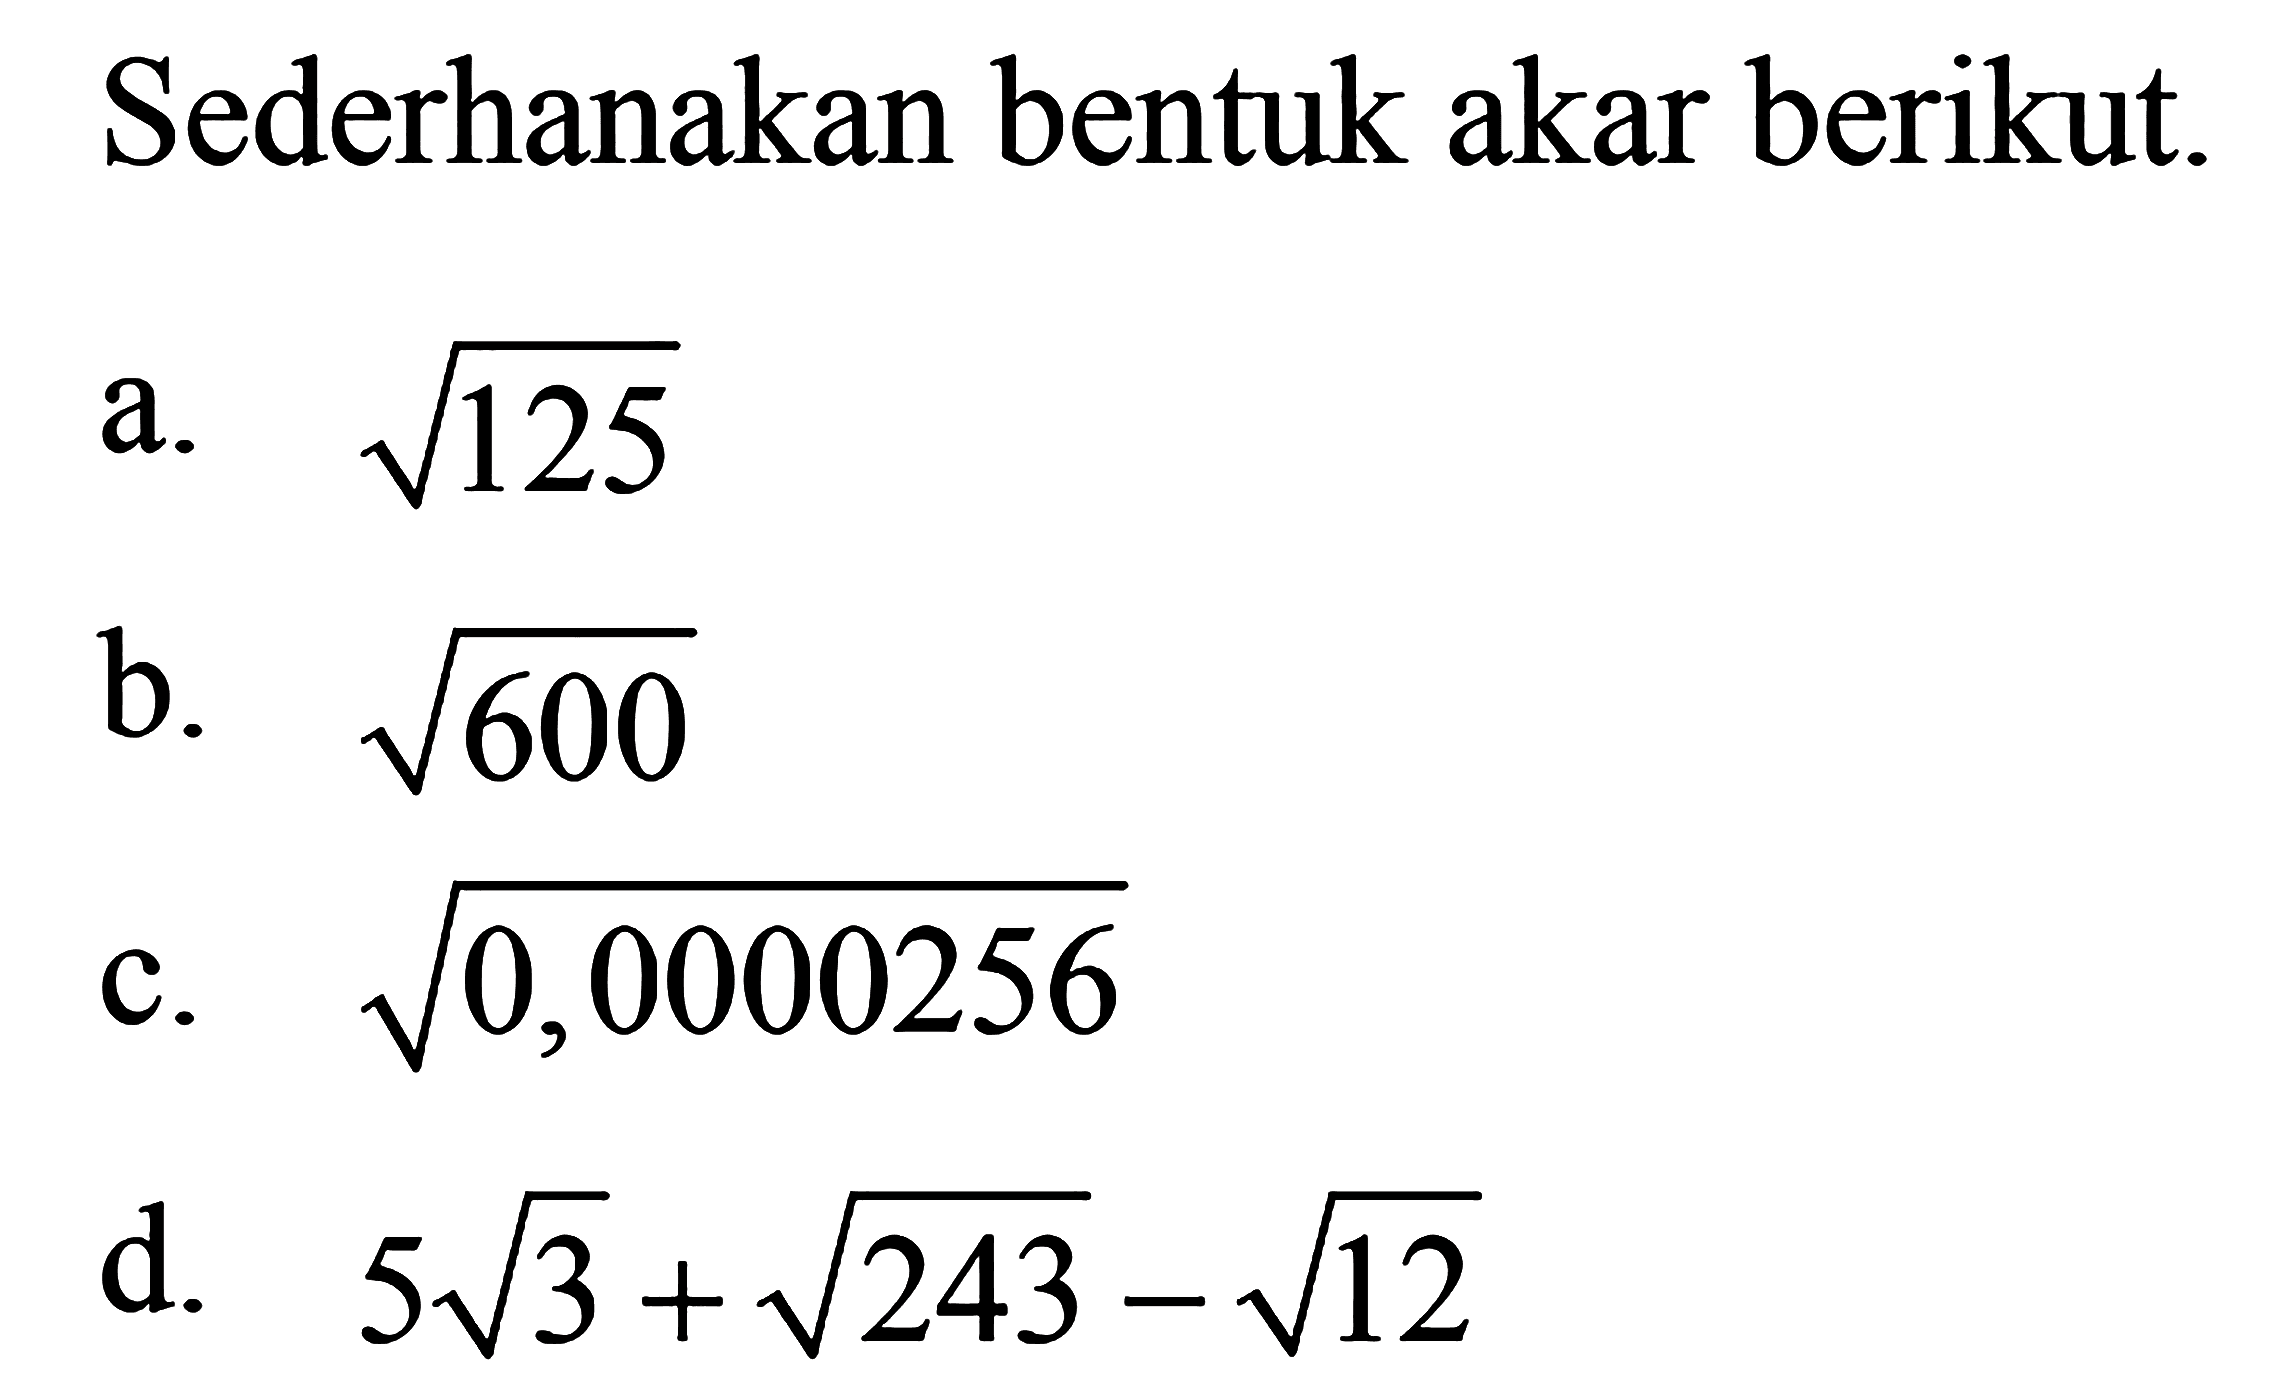 Sederhanakan bentuk akar berikut a. akar(125) b. akar(600) c. akar(0,0000256) d. 5akar(3) + akar(243) - akar(12)